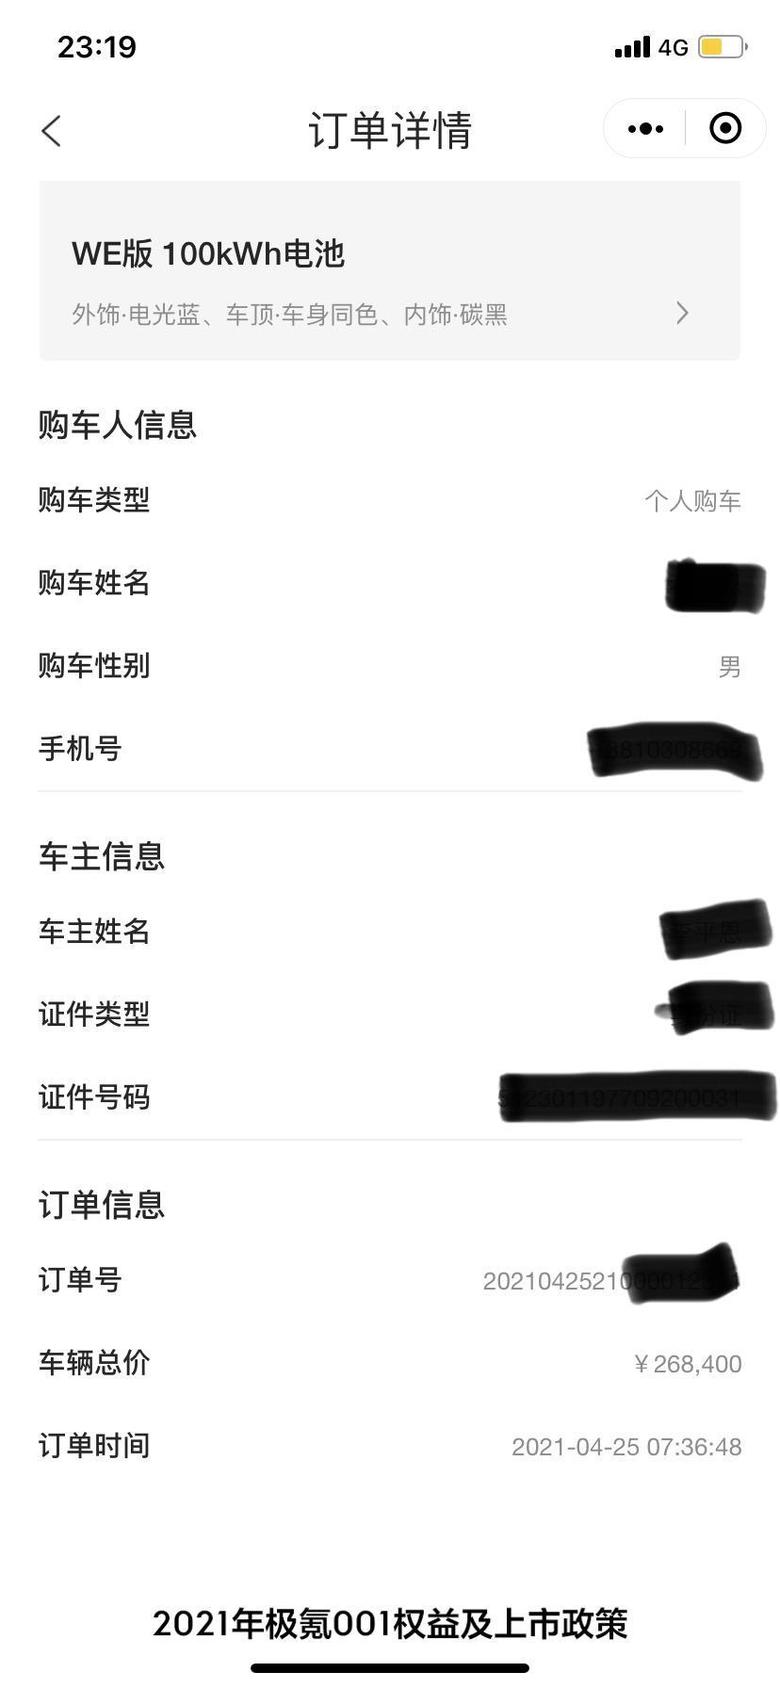 zeekr 001 北京转极氪4月25日订单，北京地区可见面交易，7月中旬在app上可修改配置，非诚勿扰，谢谢。